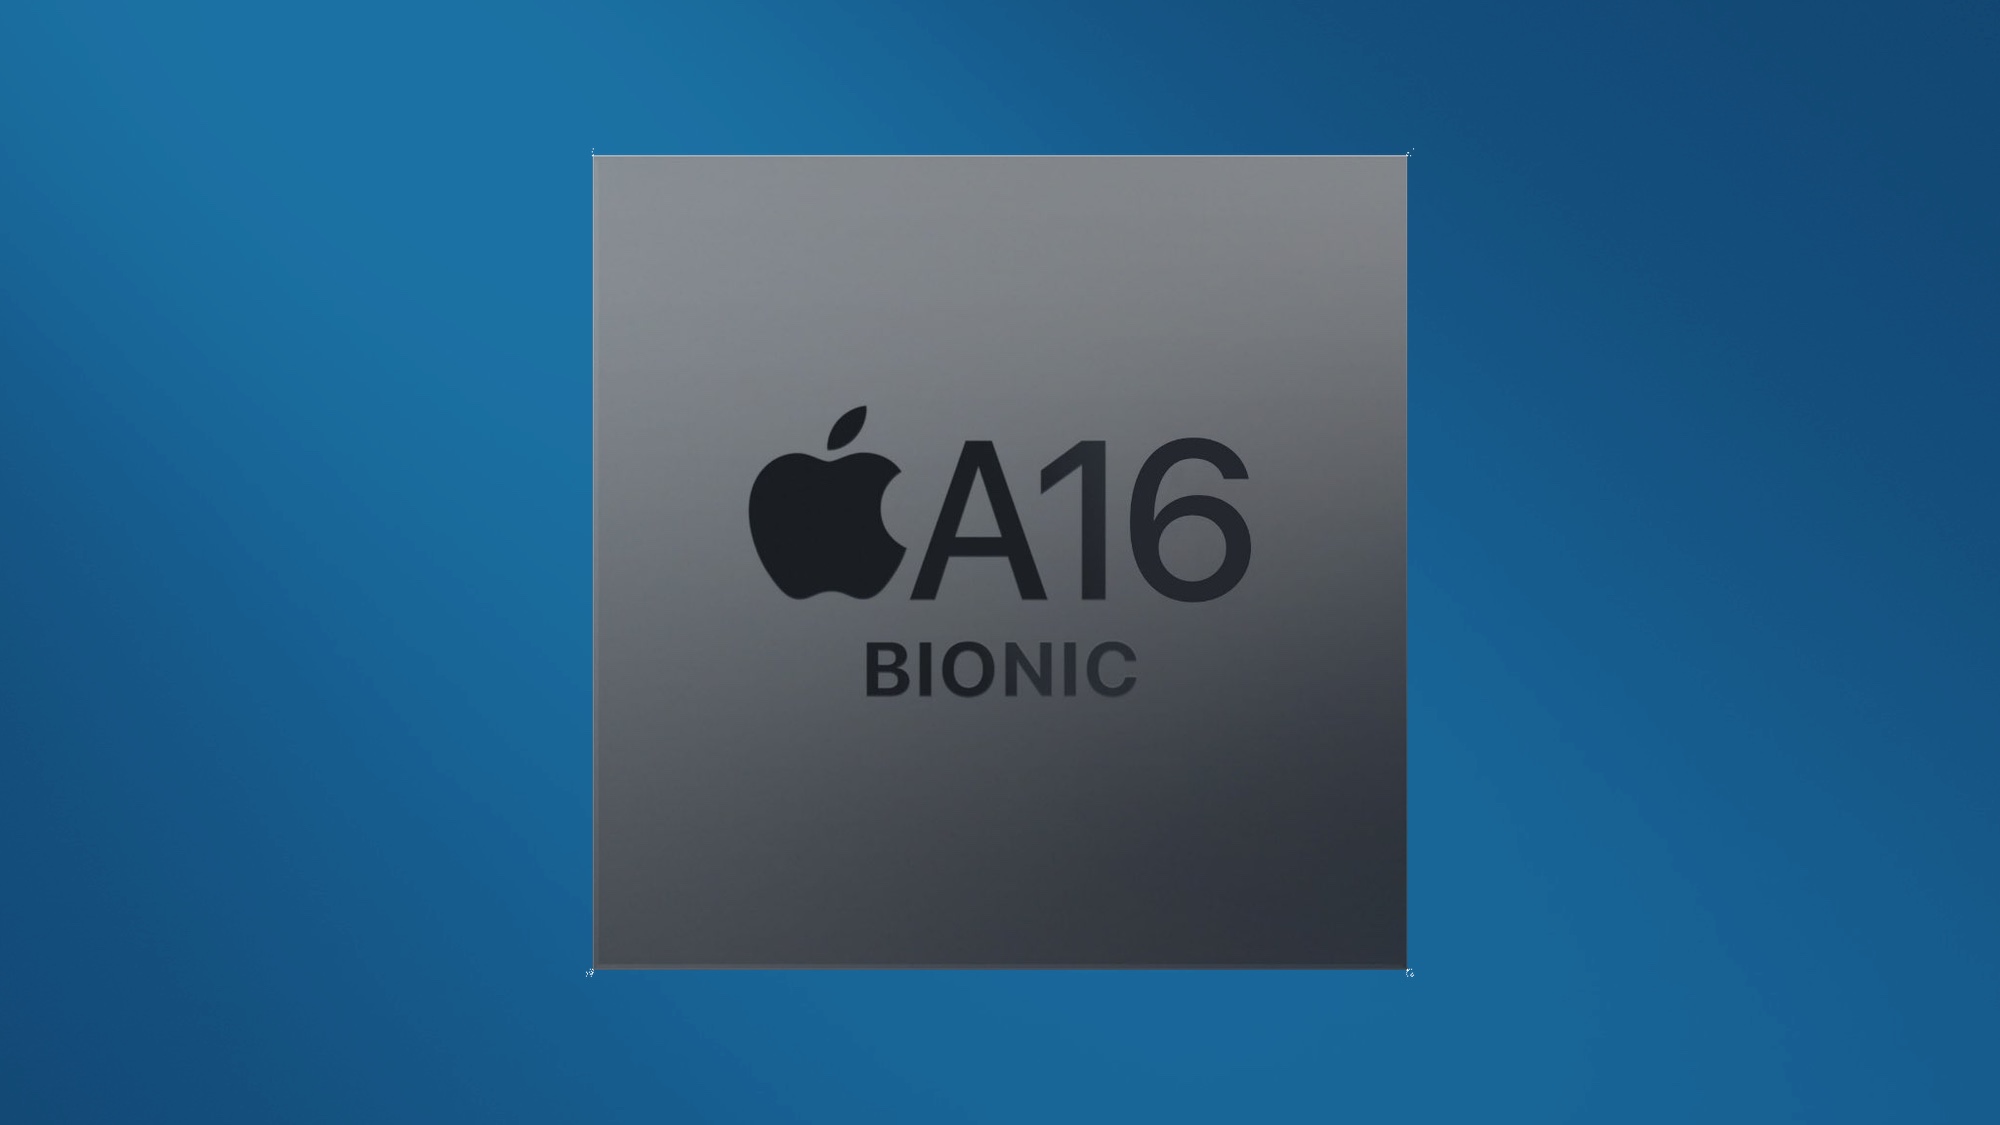 A16 Bionic chipset render